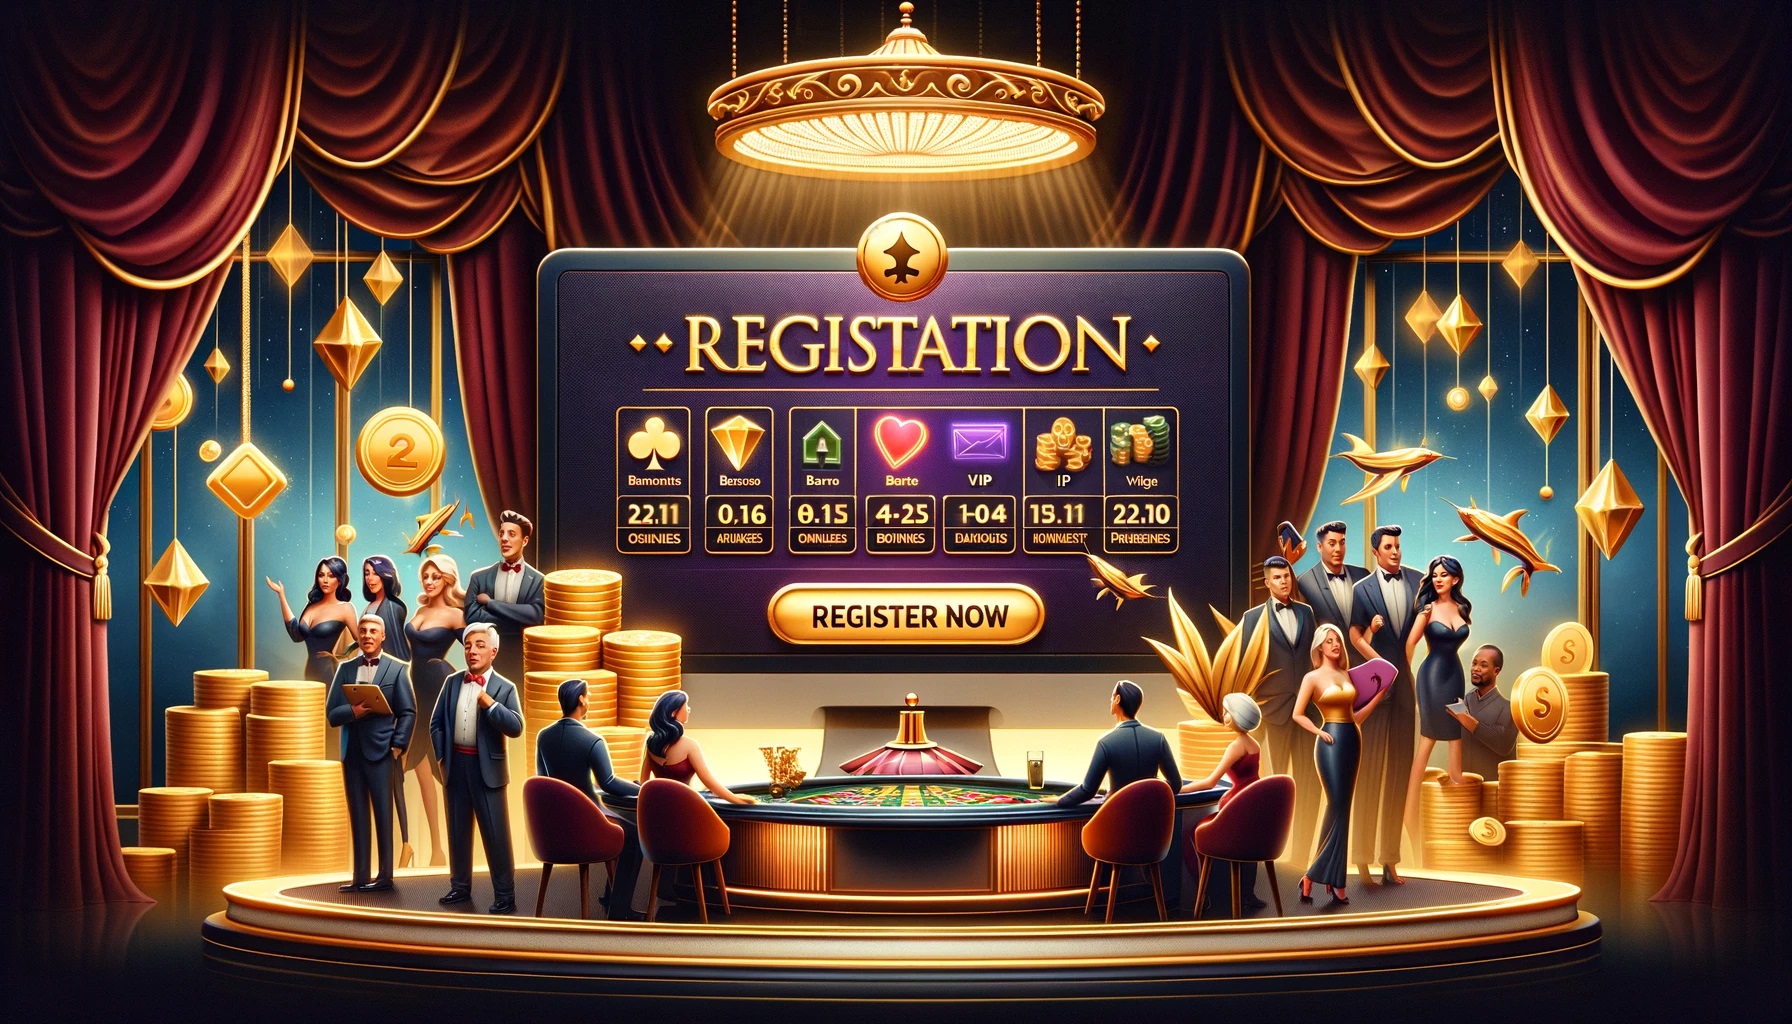 Registration in an Online Casino Advantages